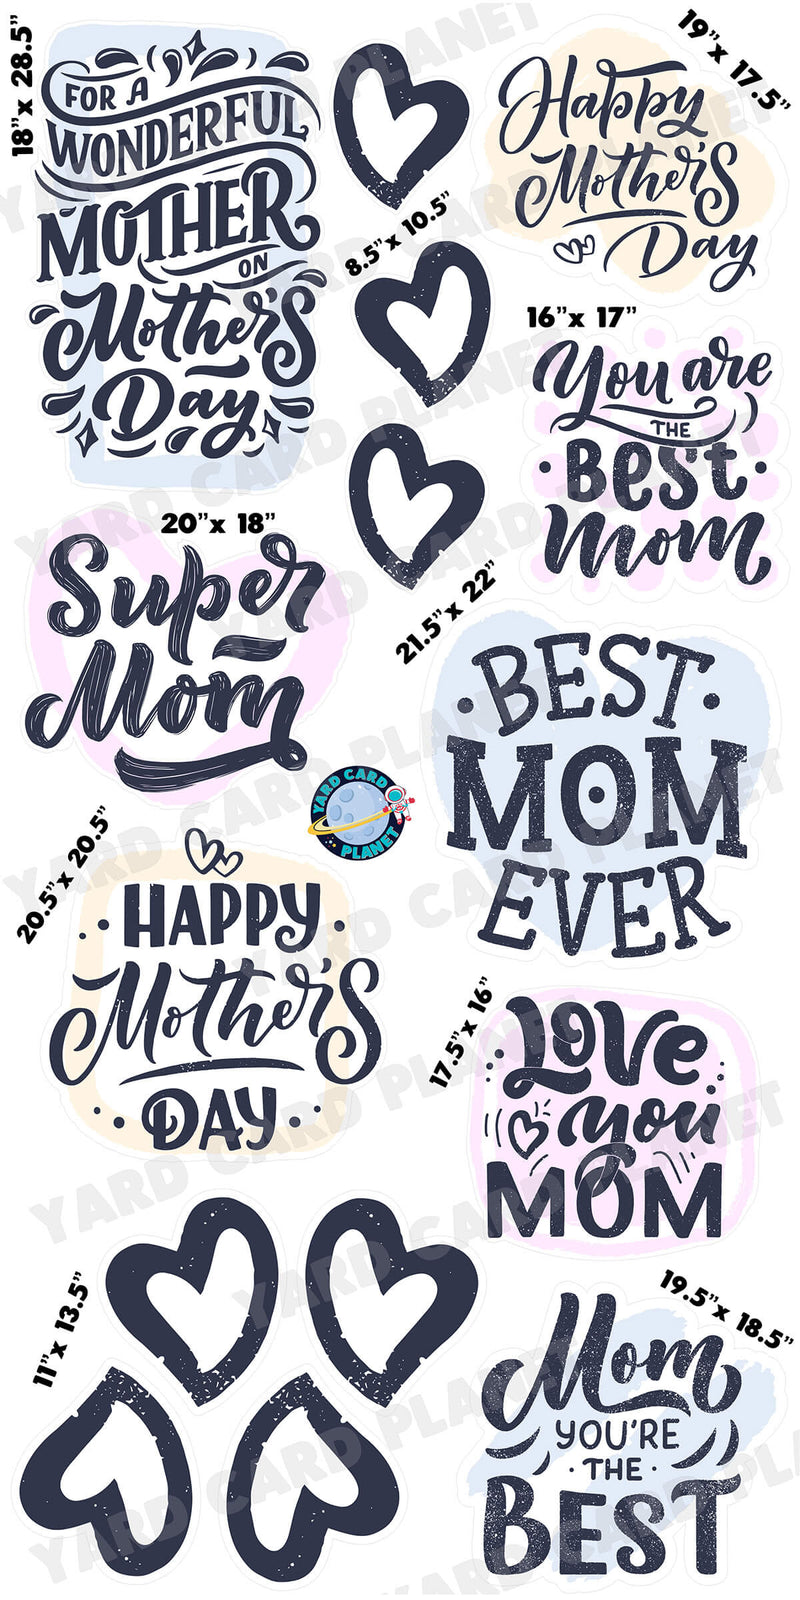 Super Mom Superhero Mother's Day Yard Card Flair Set